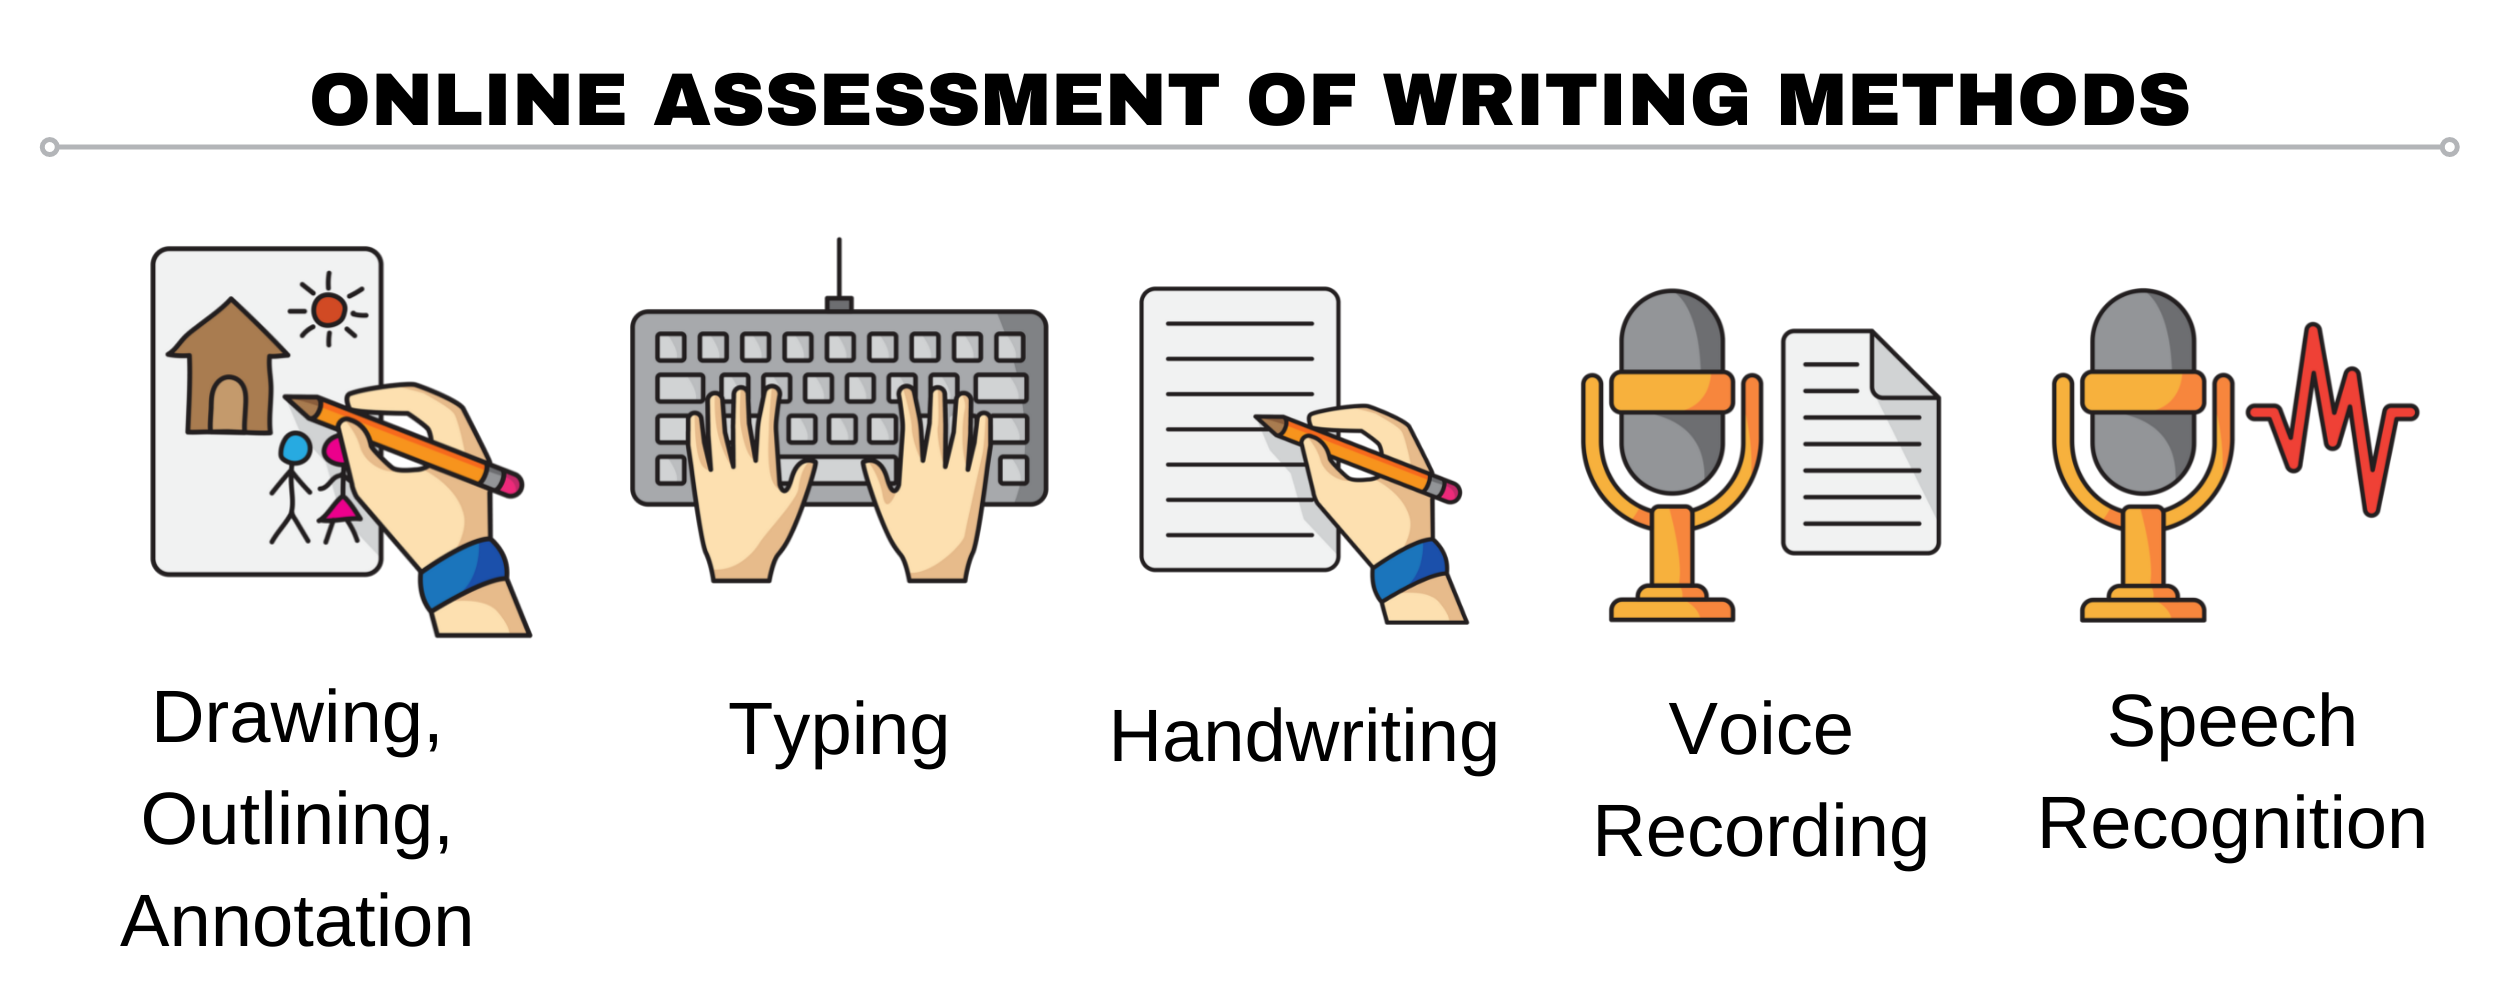 5 Methods of Writing